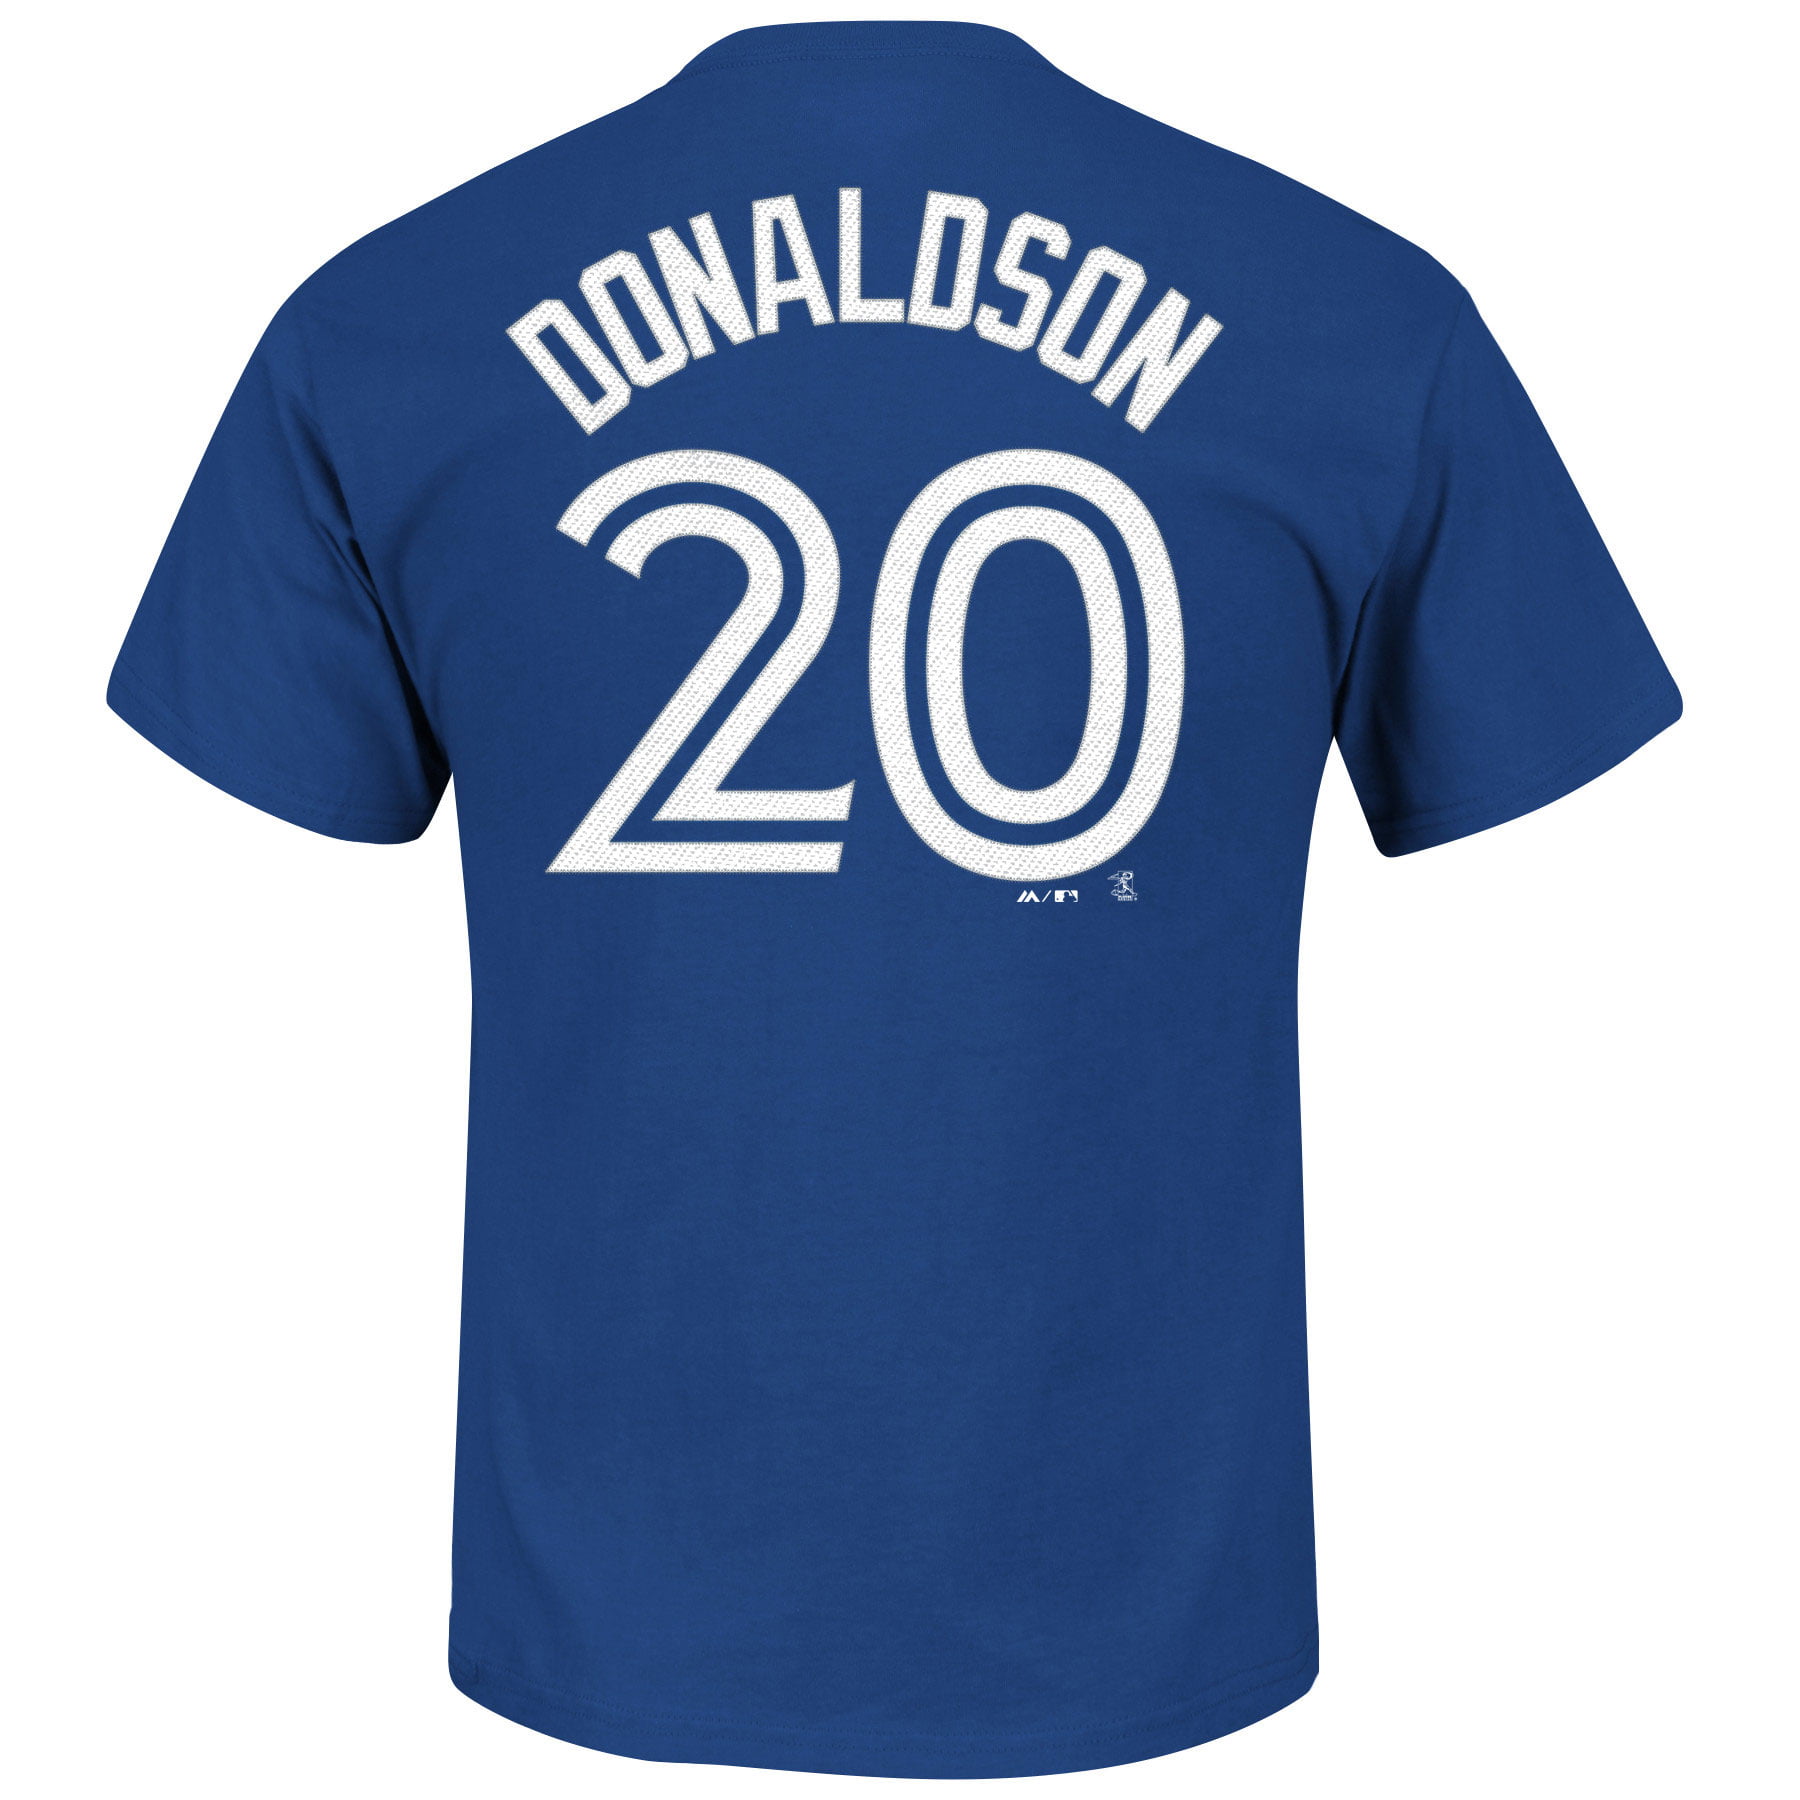 josh donaldson jersey for sale